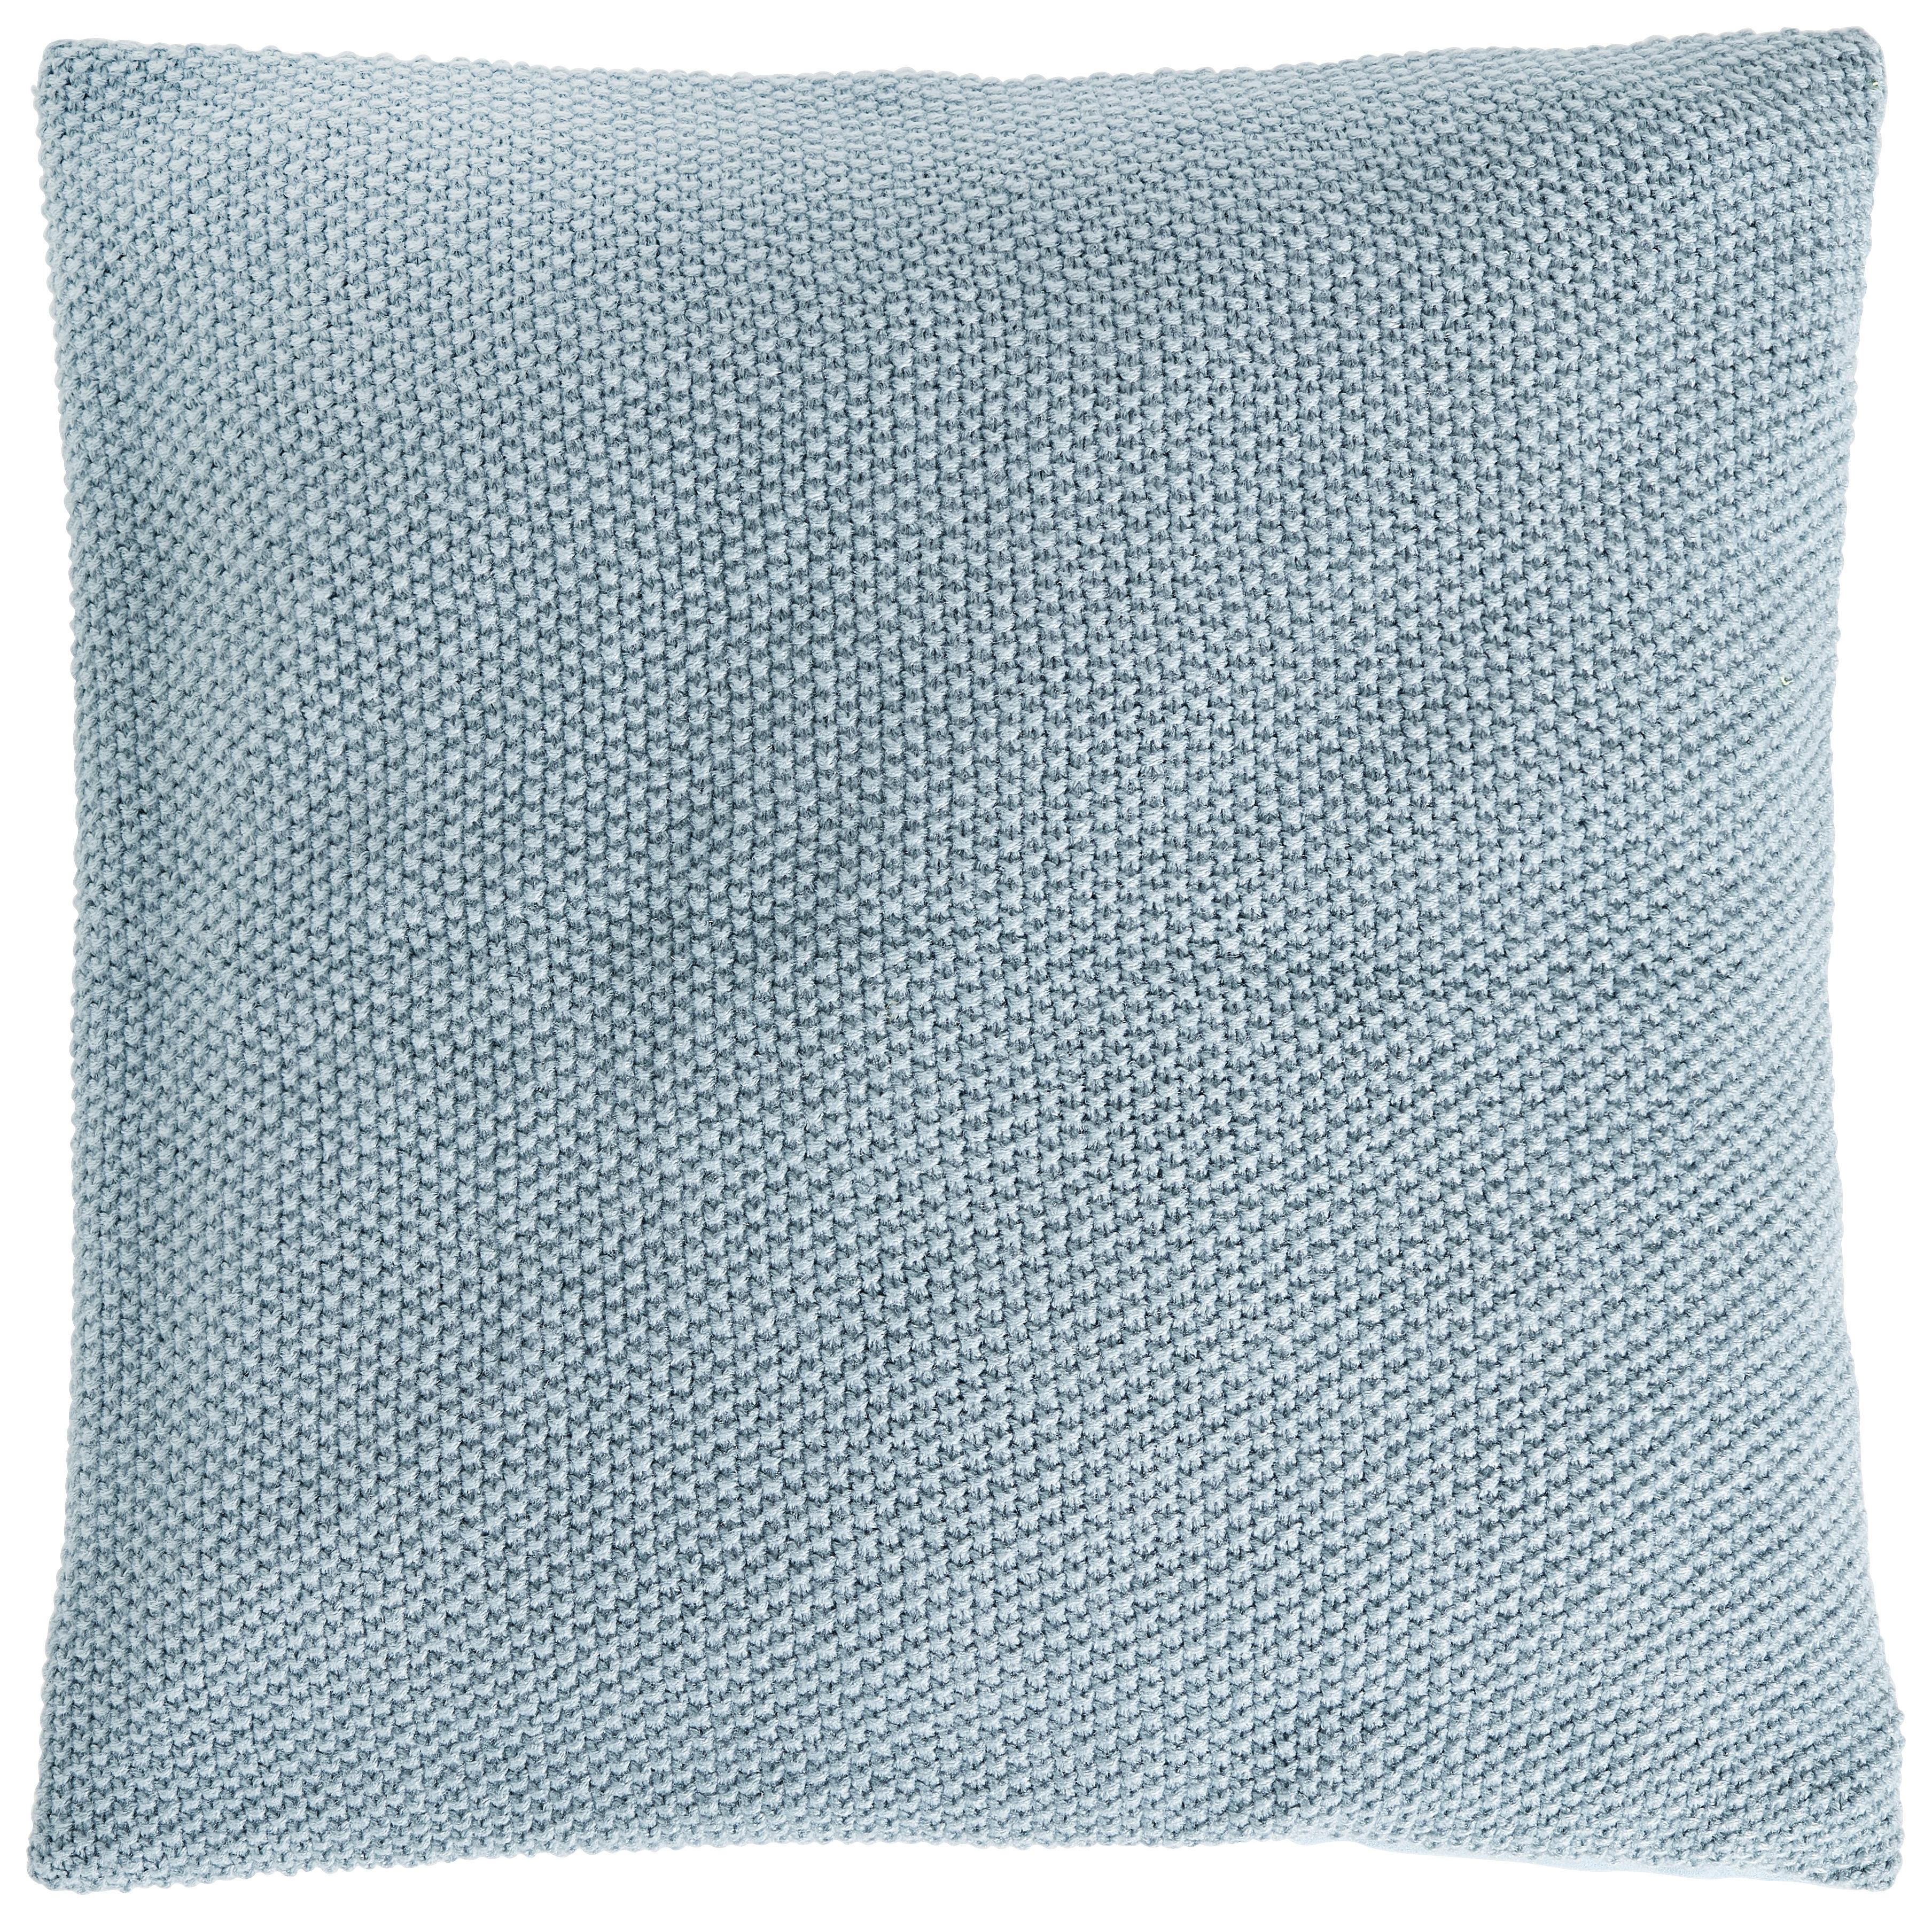 SOFAKISSEN  - Grün, Trend, Textil (40/40/8cm)